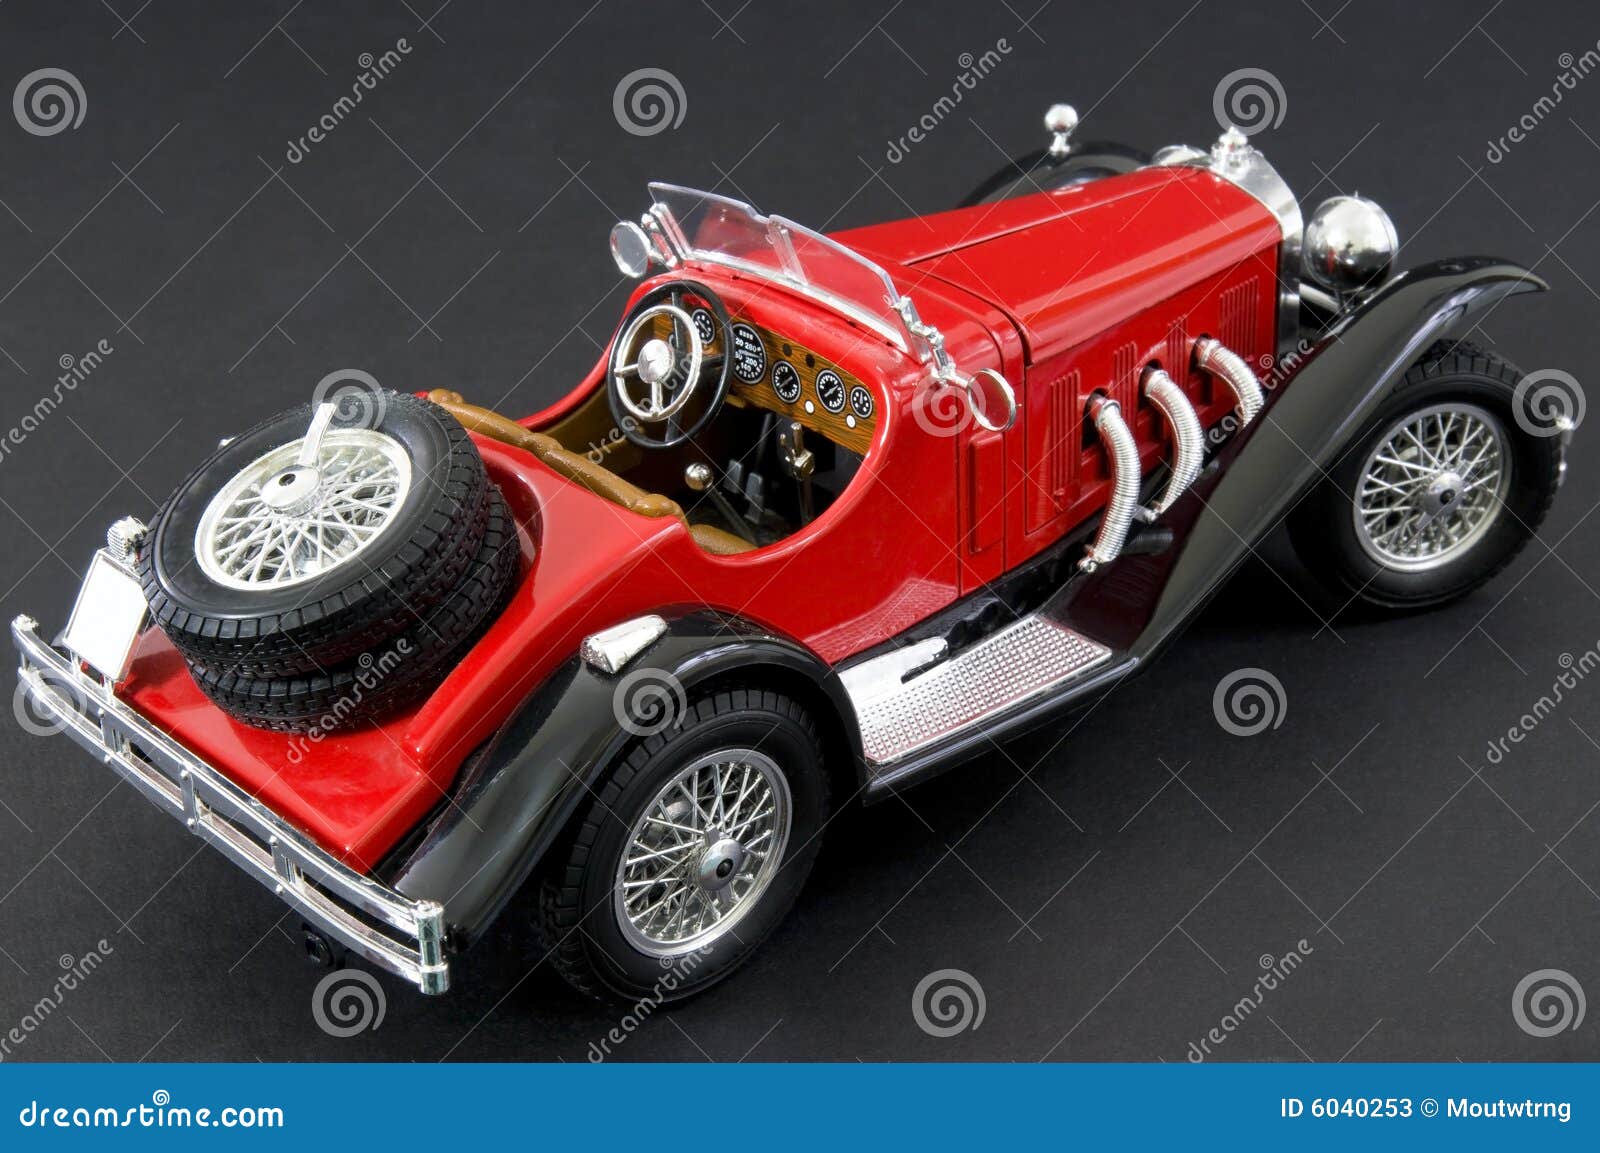 luxurious red retro classic car